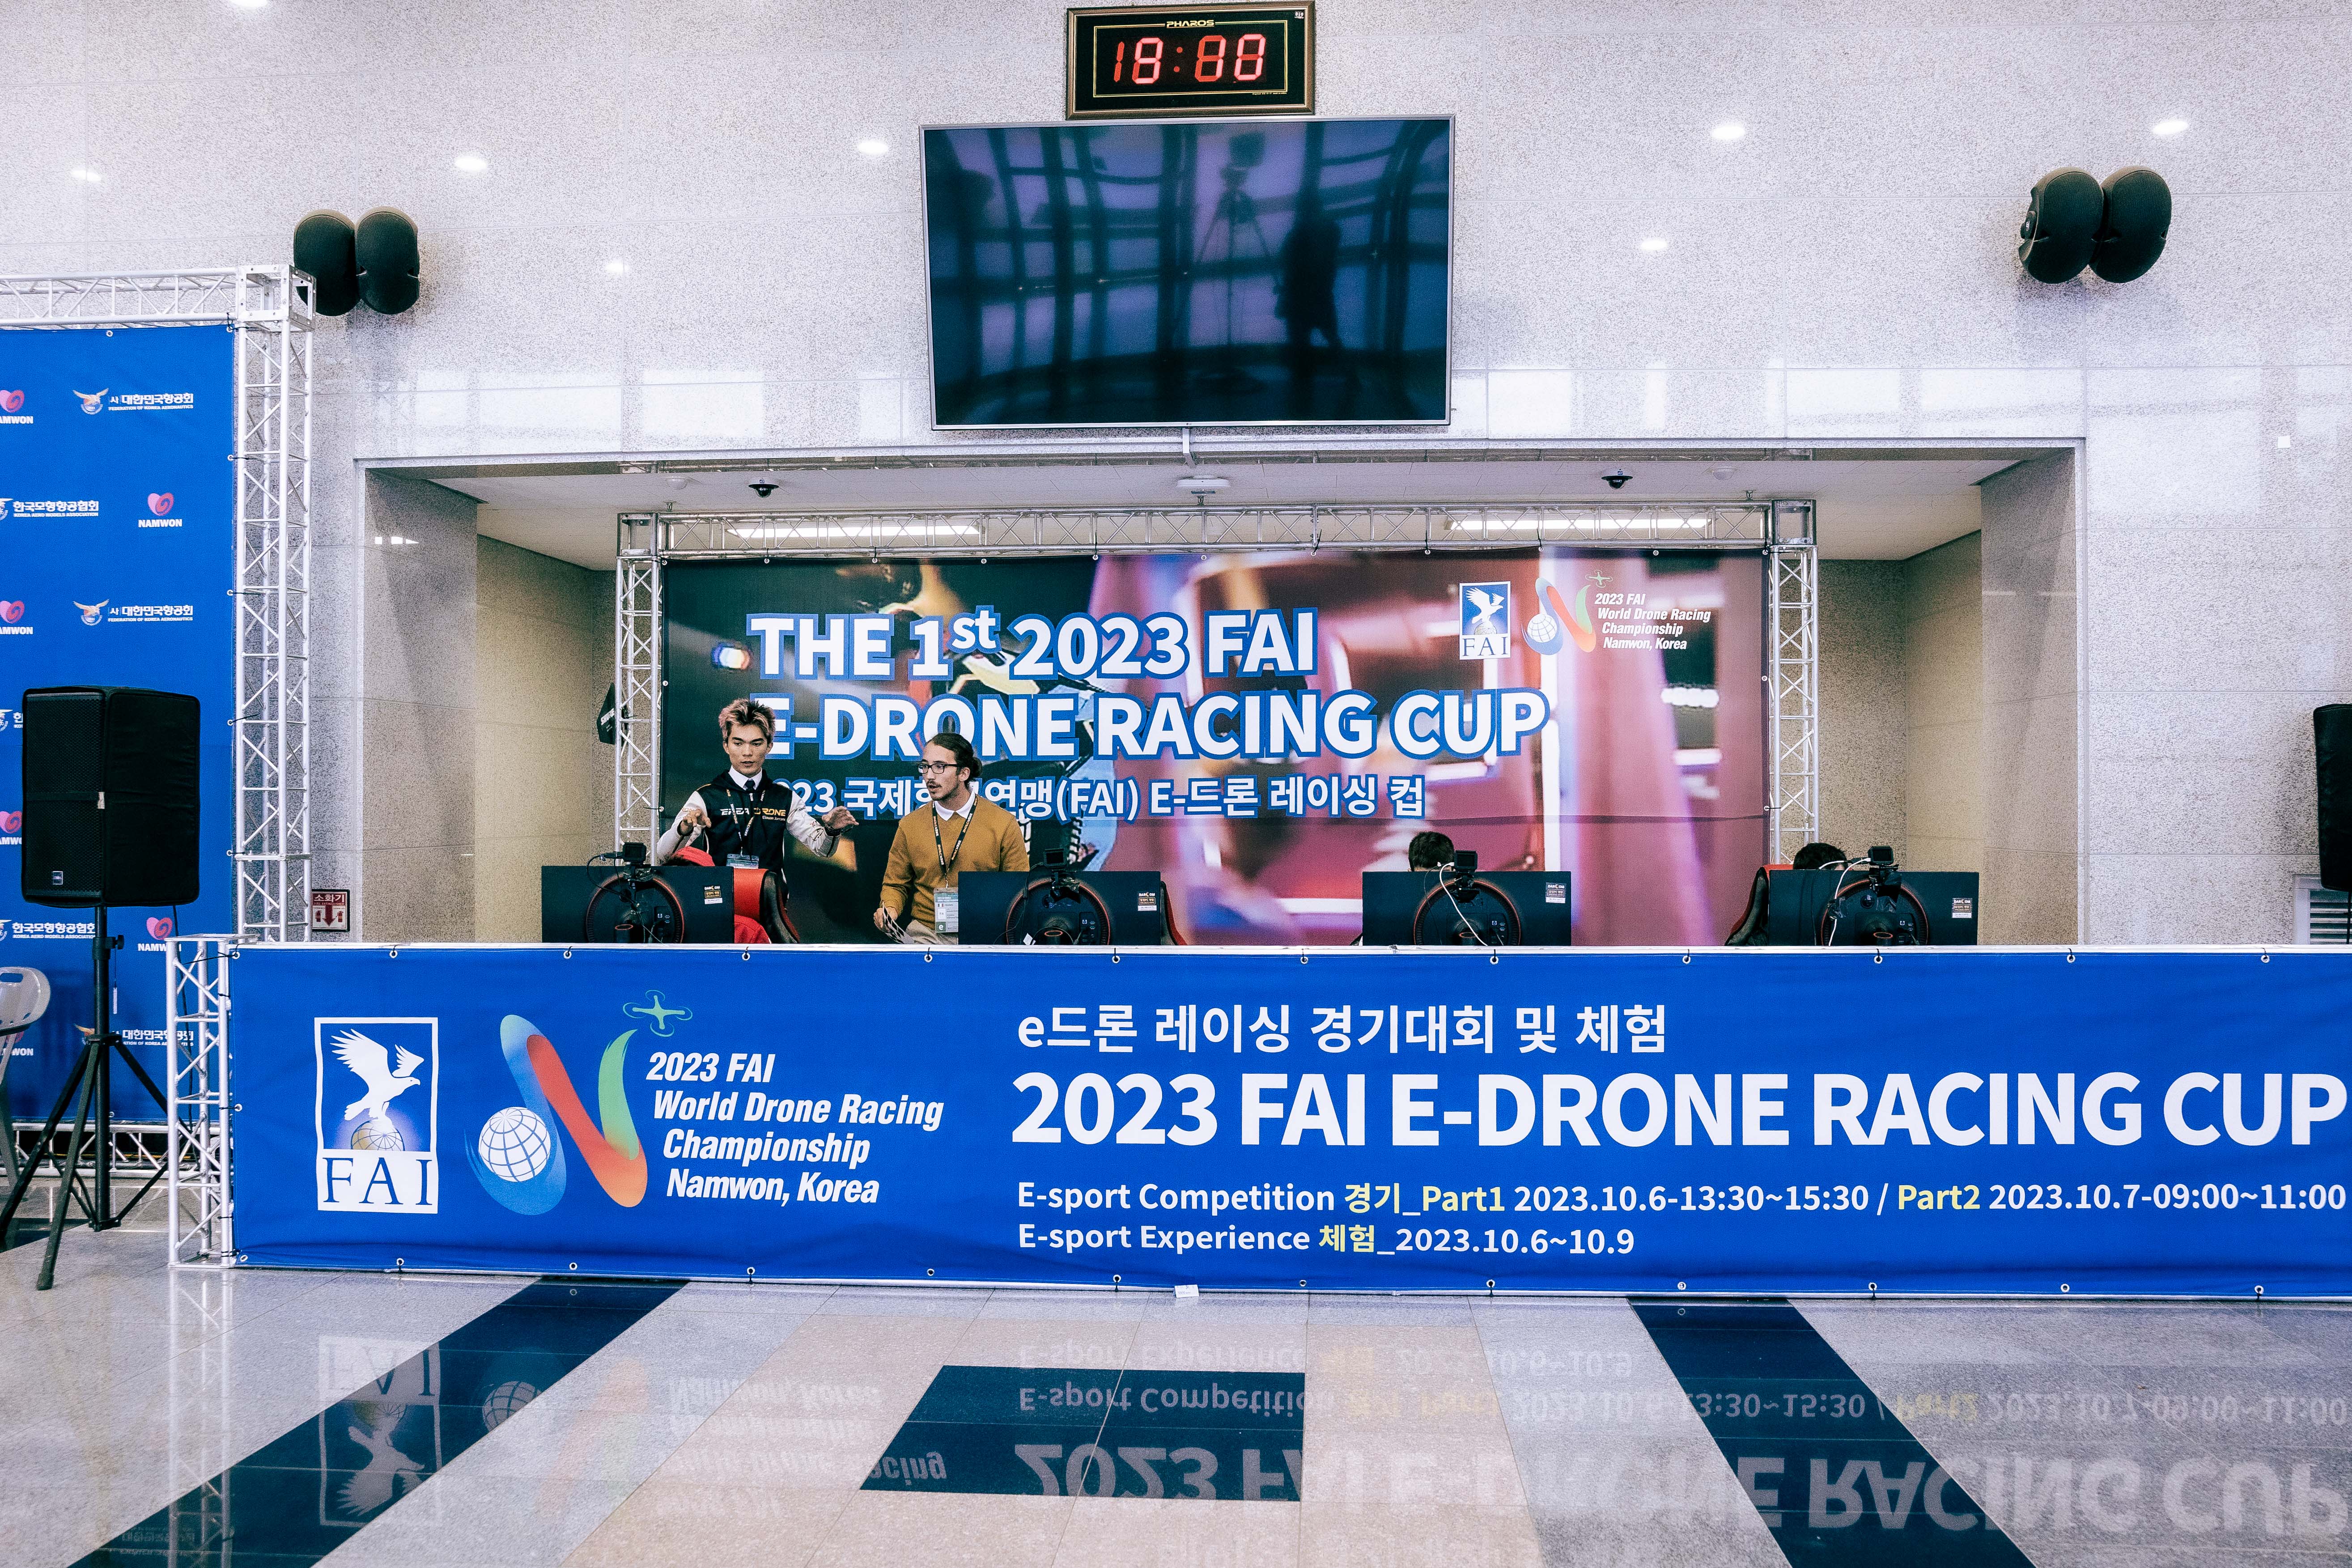 Elouan and Alexander preparing the 2023 FAI eDrone Racing Cup at Namwon, Korea on October 2023